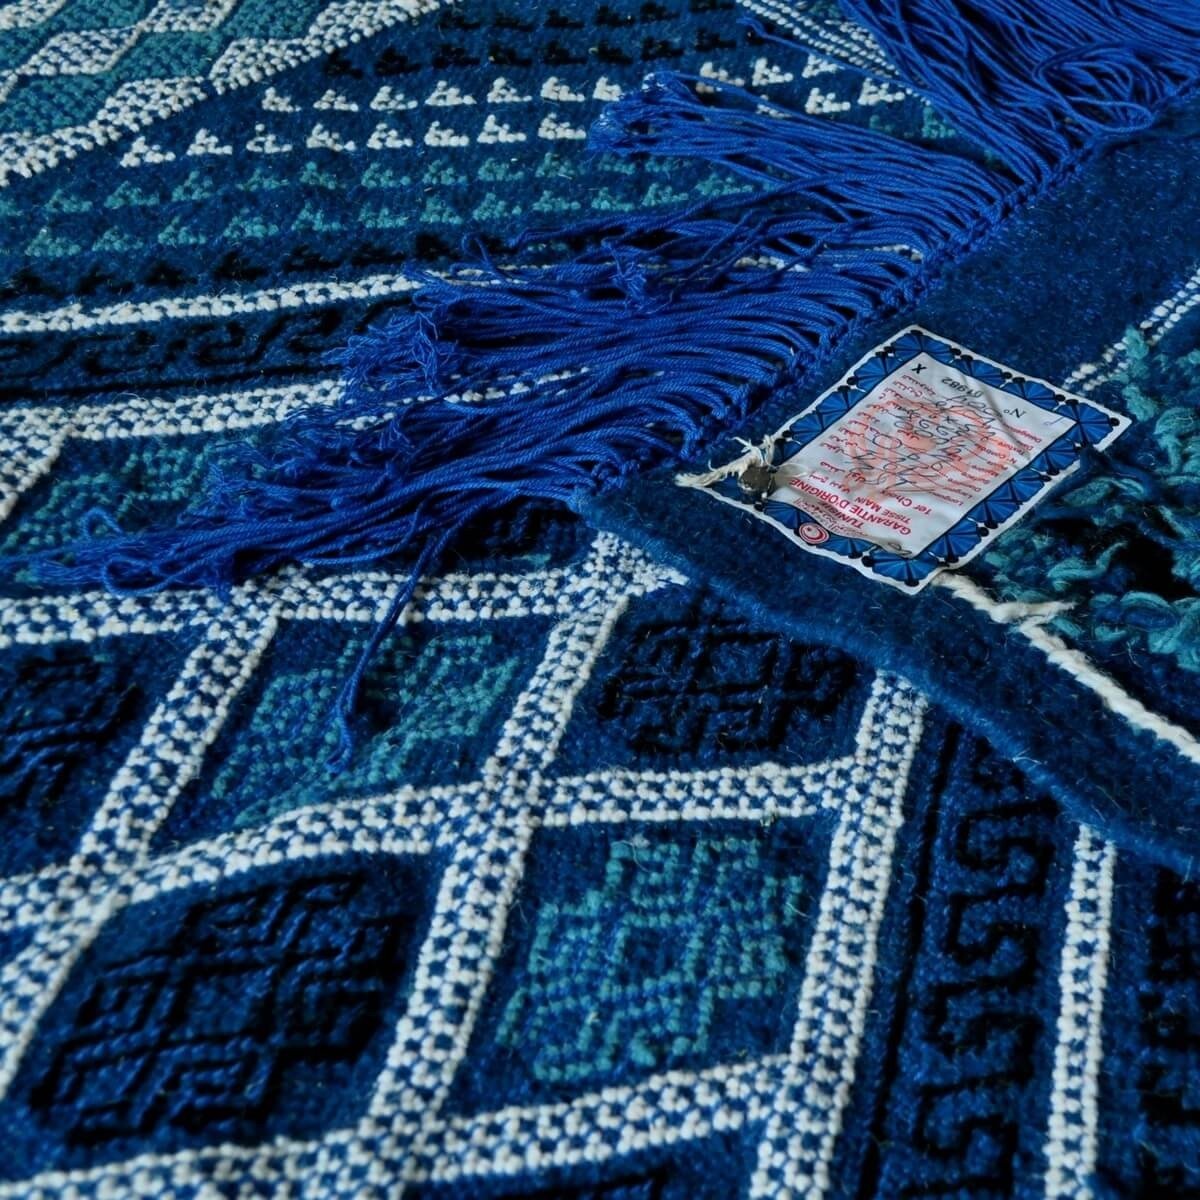 Berber carpet Rug Margoum Nidhal 120x180 Blue/White (Handmade, Wool, Tunisia) Tunisian margoum rug from the city of Kairouan. Re